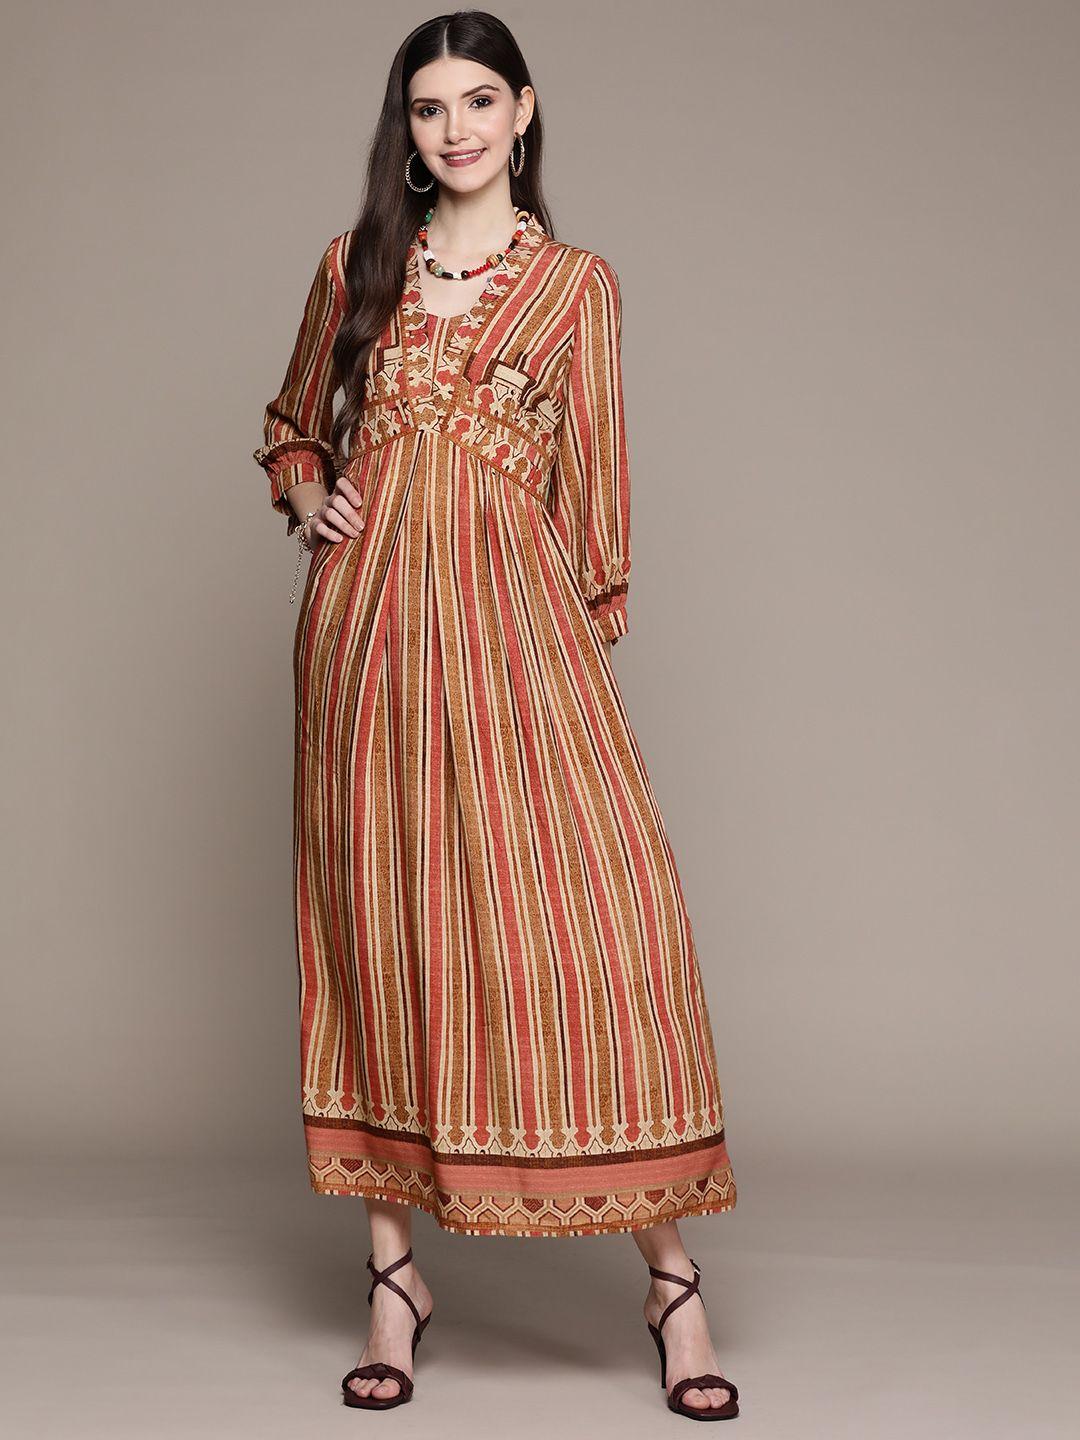 aarke ritu kumar brown & pink striped maxi ethnic dress